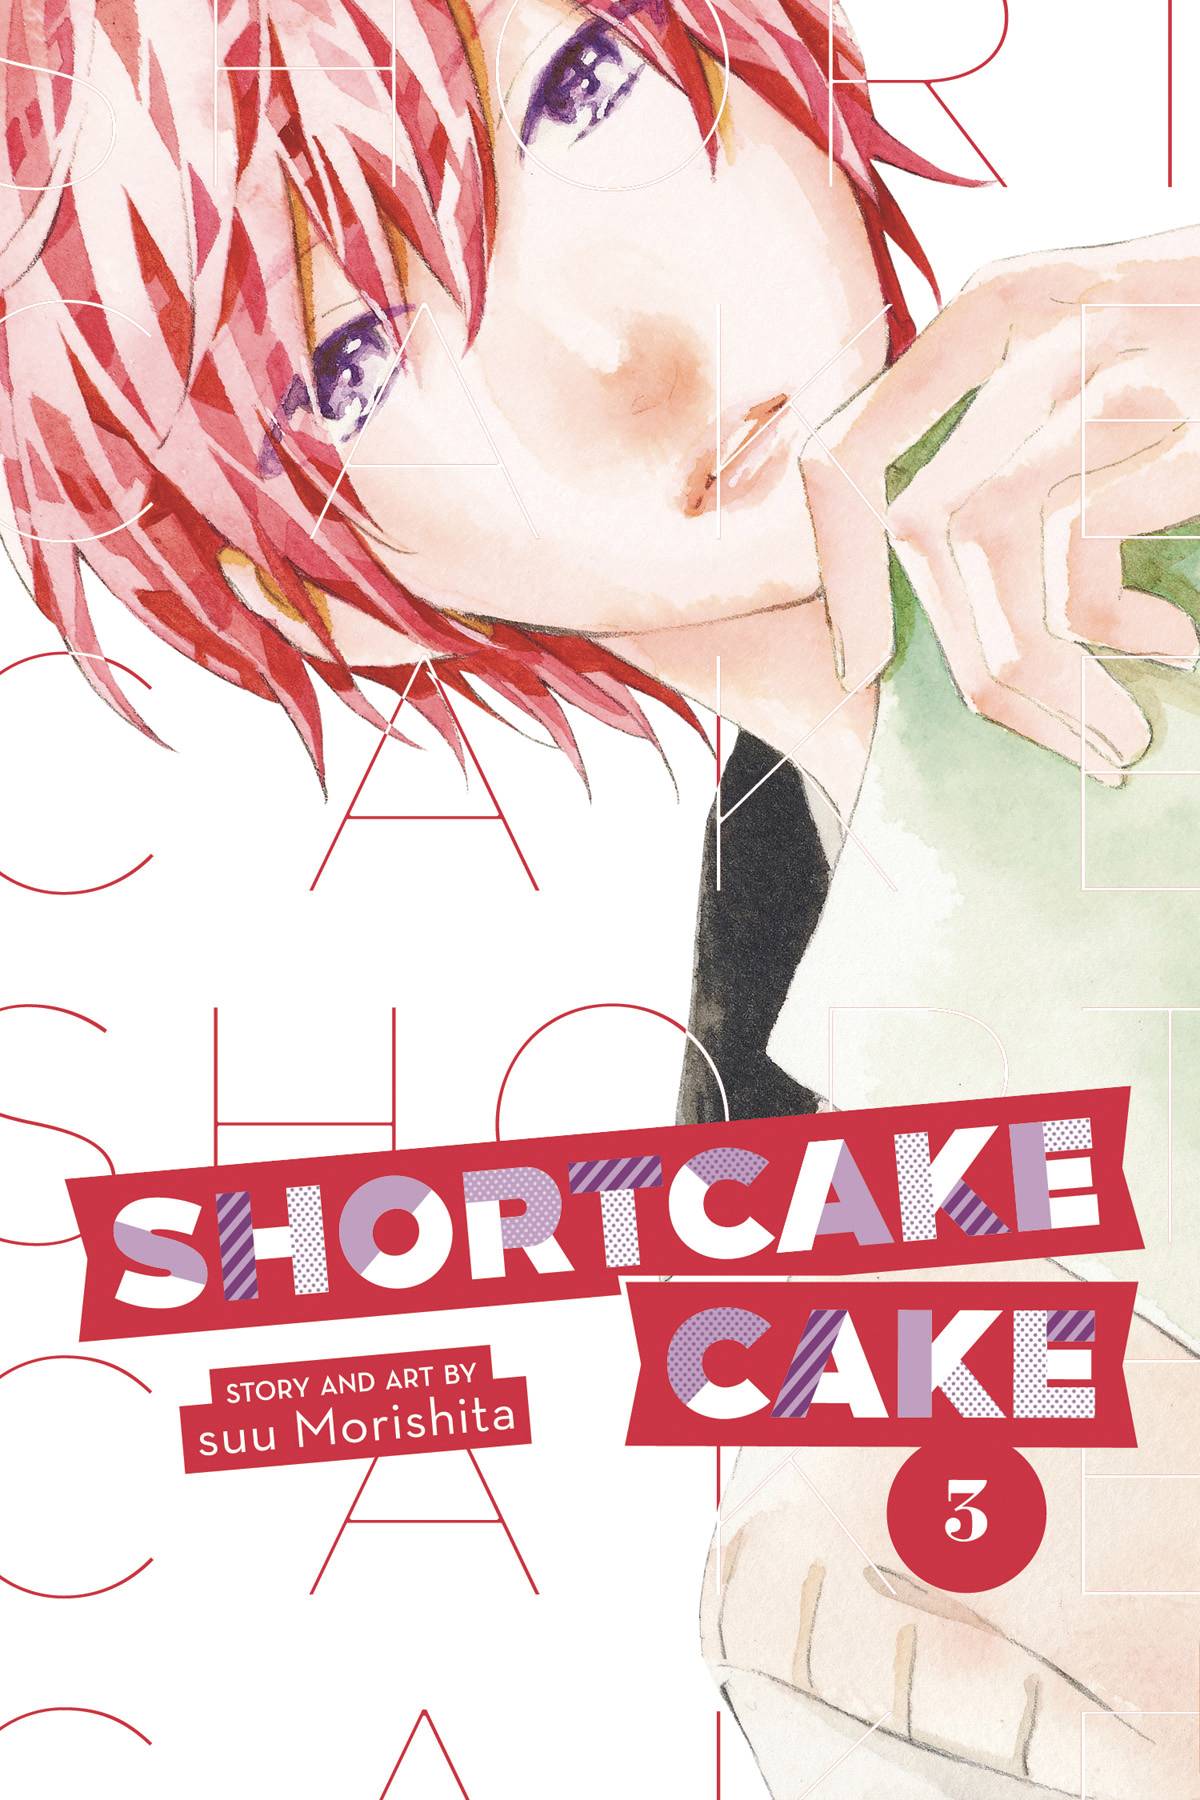 SHORTCAKE CAKE GN VOL 03